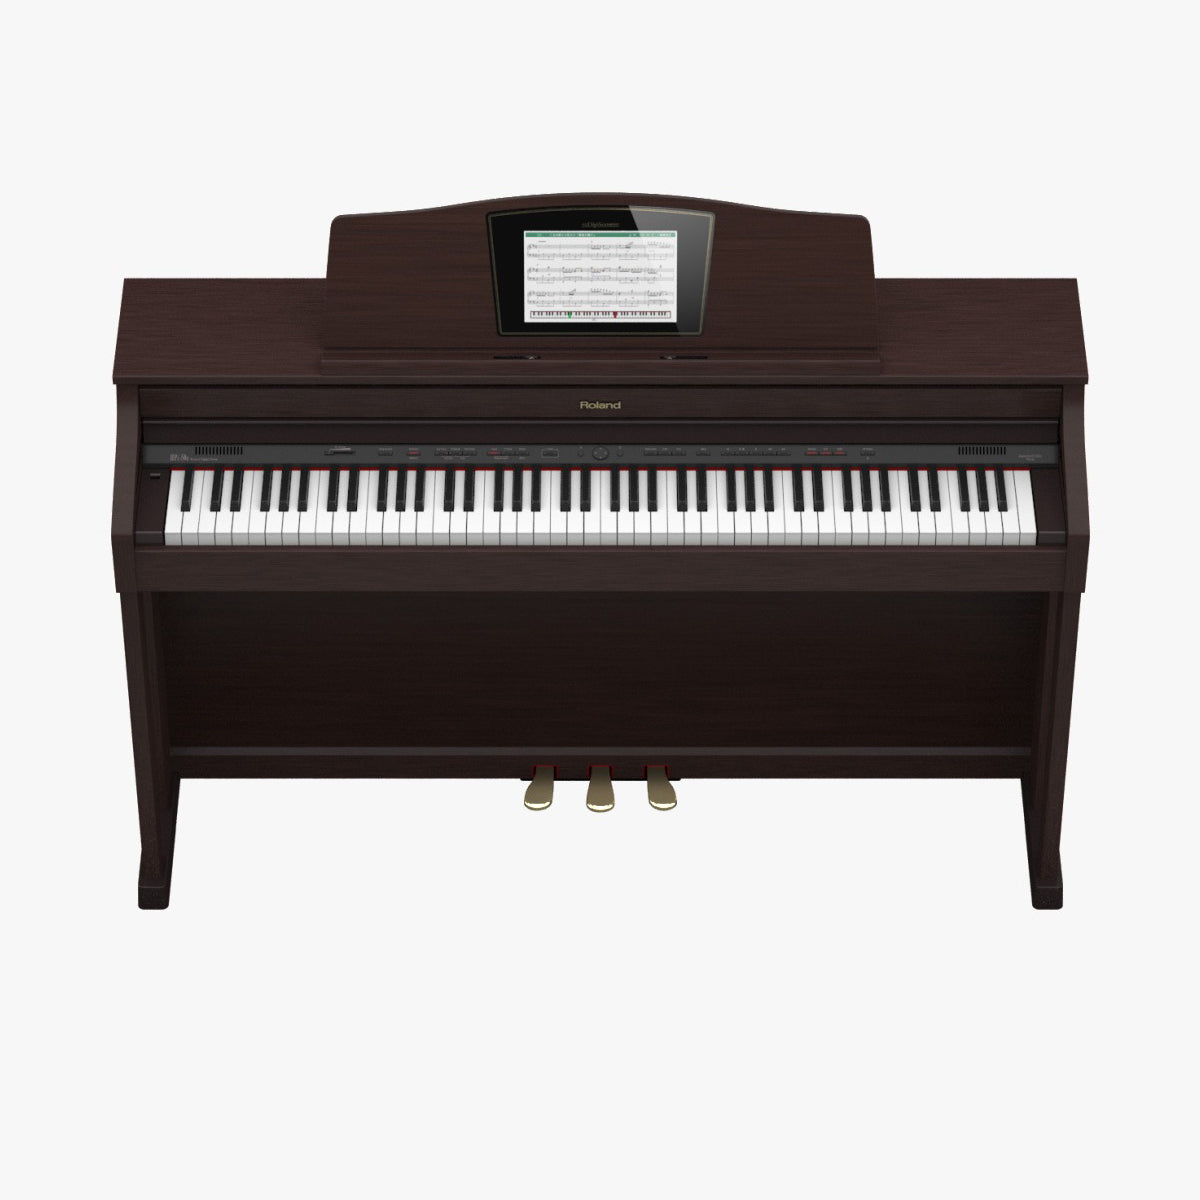 Đàn Piano Điện Roland HPi50 - Qua Sử Dụng